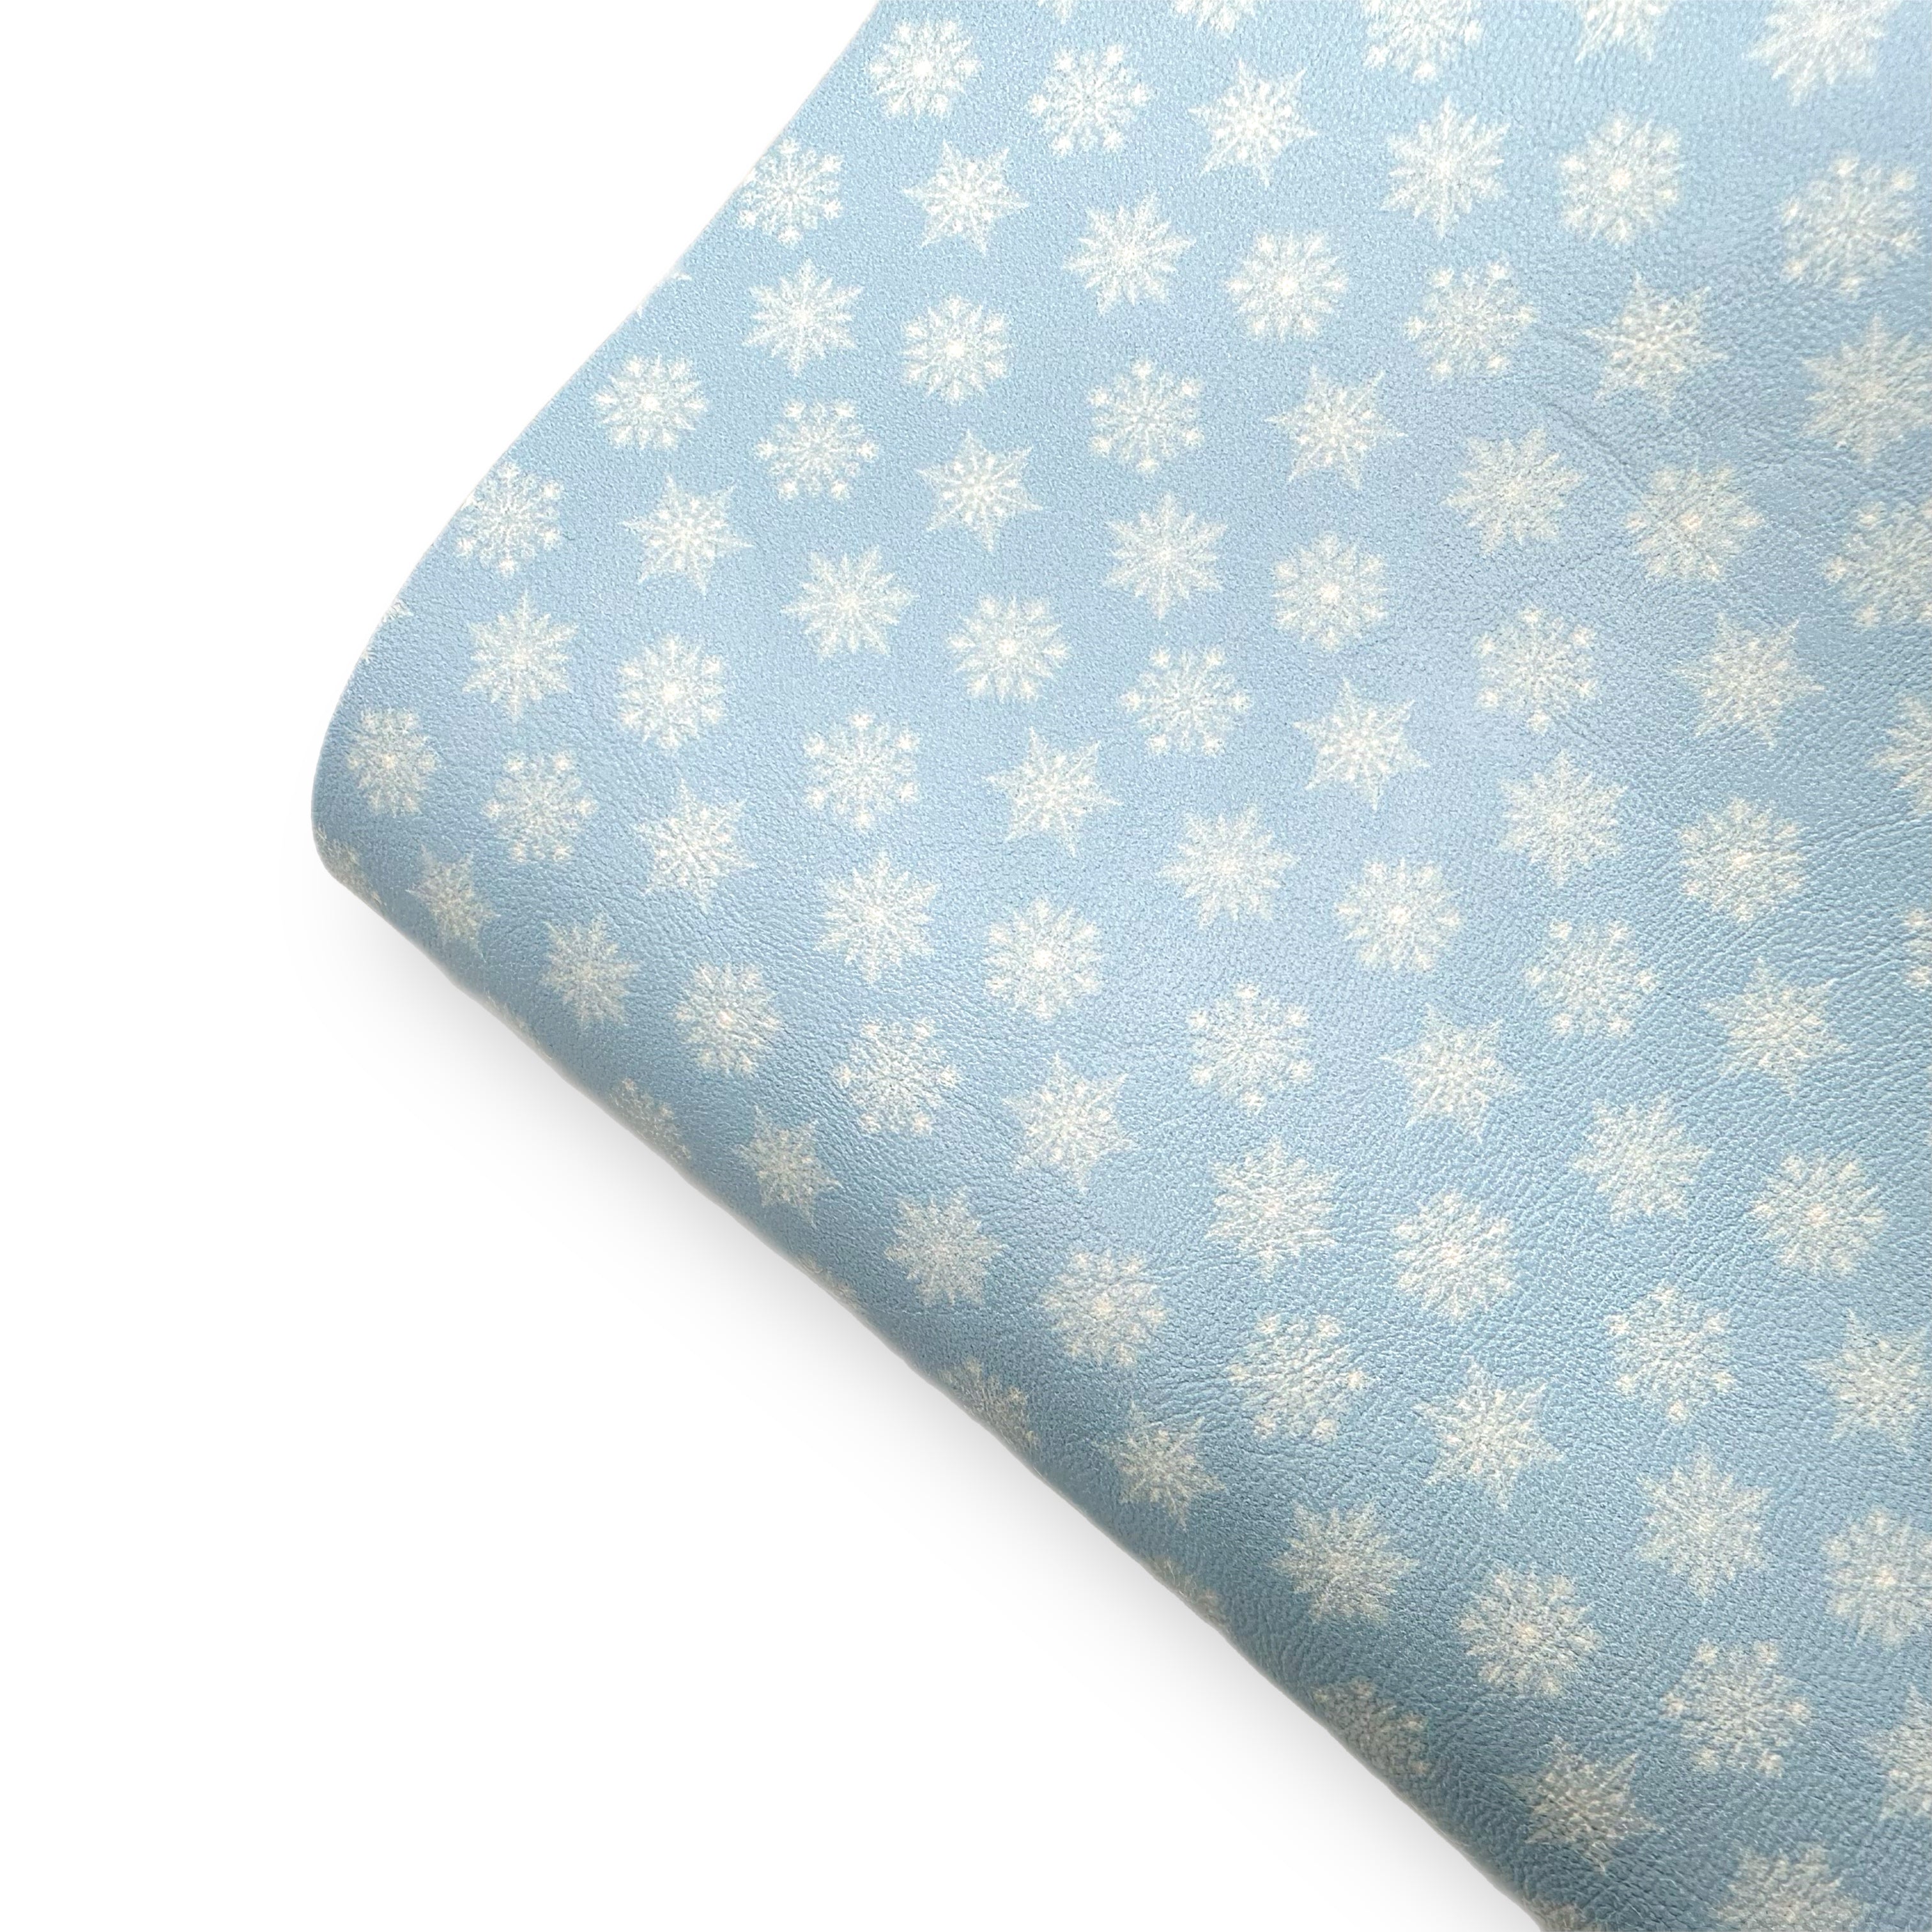 Soft Blue Snowflakes Premium Faux Leather Fabric Sheets